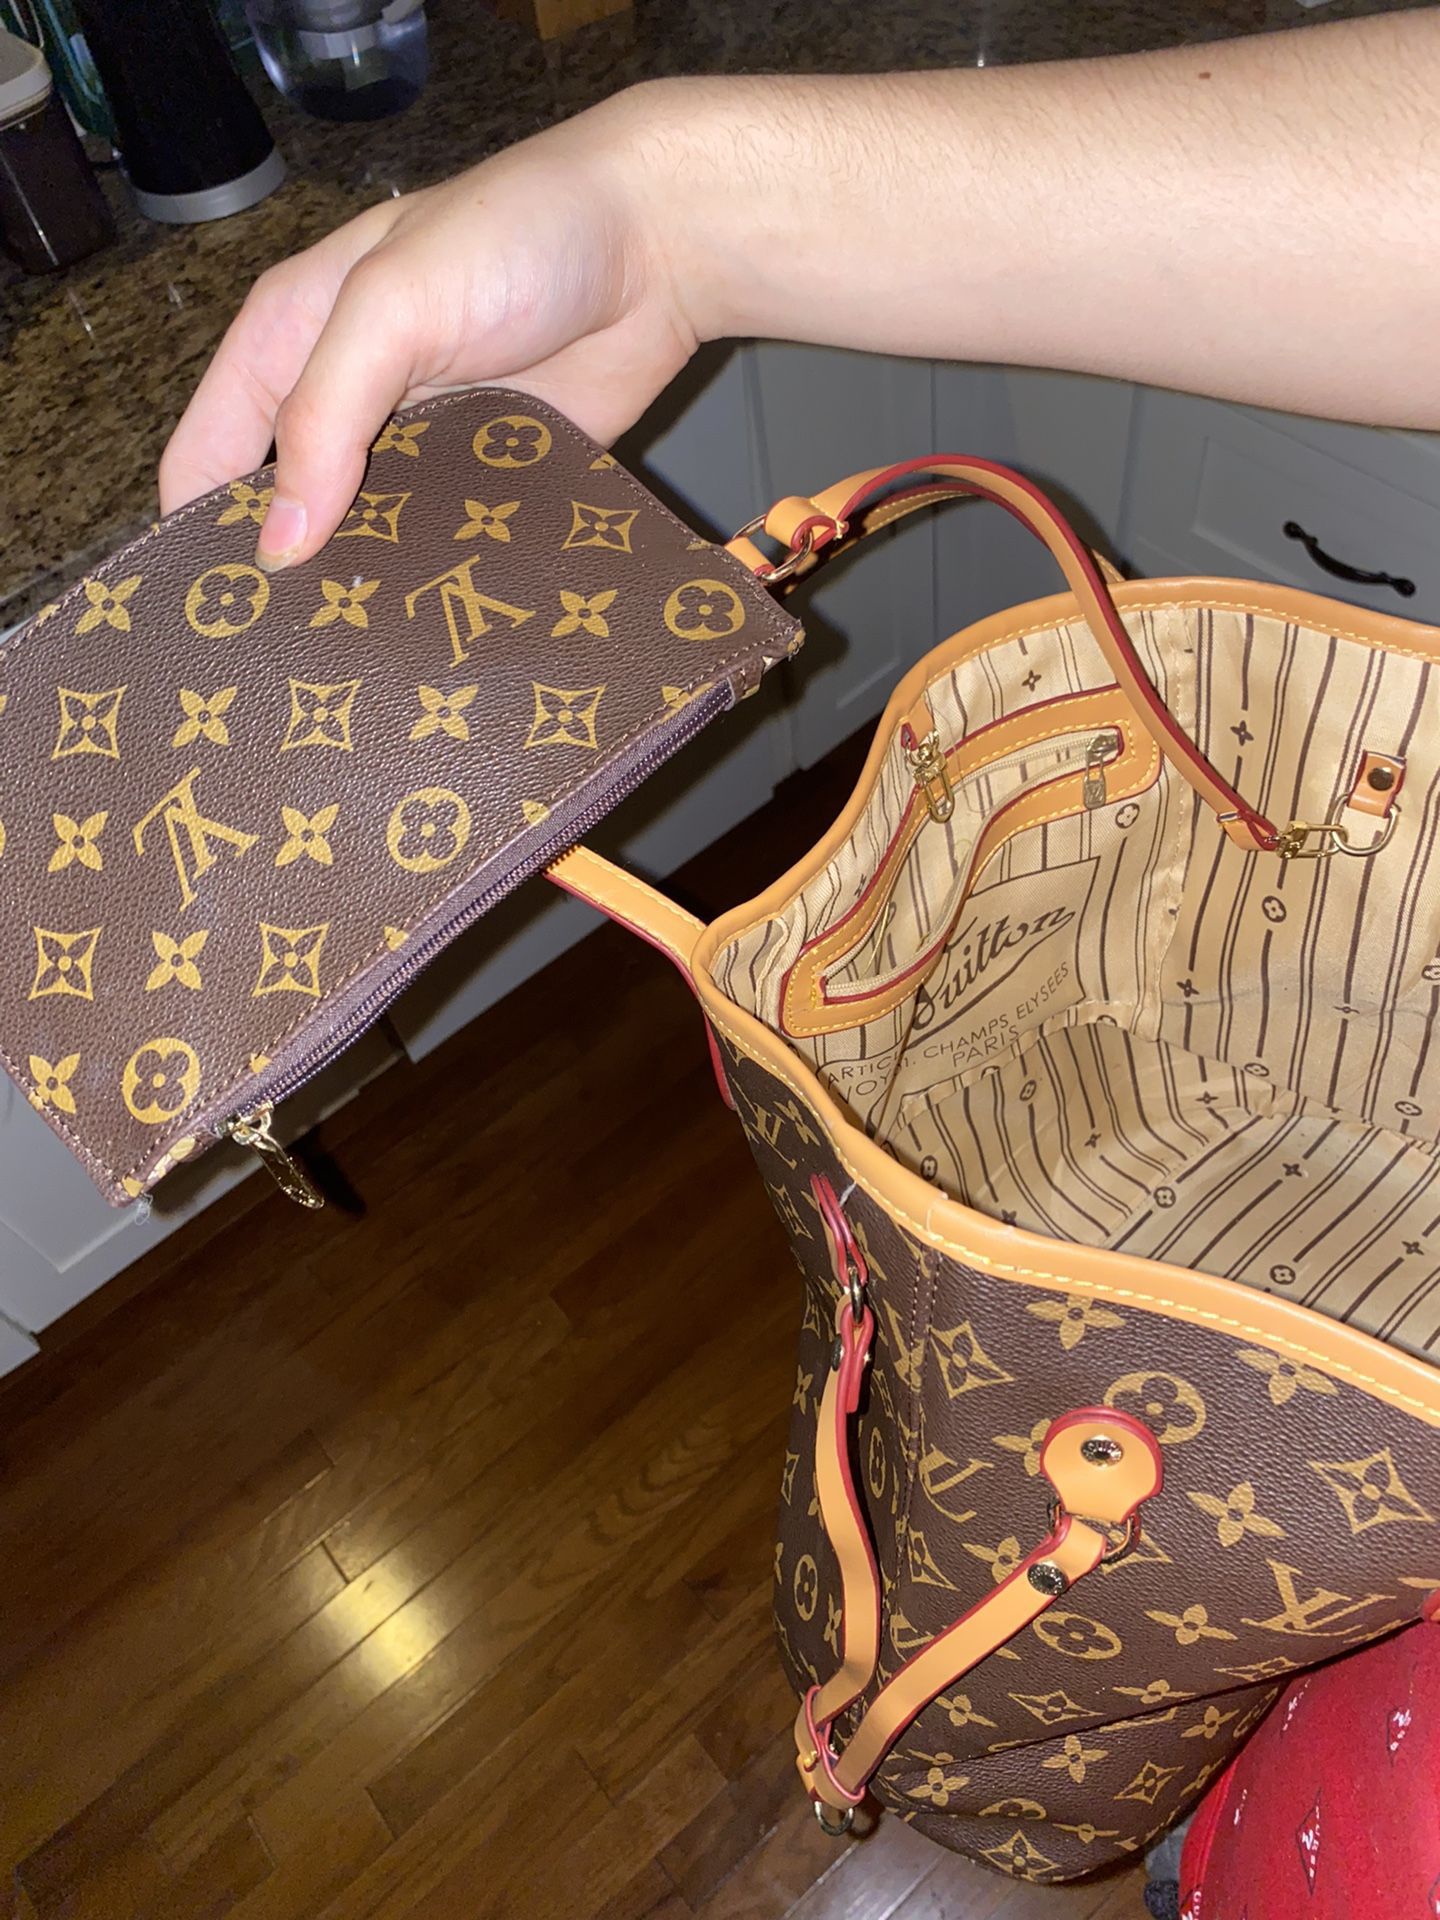 Vintage Louis Vuitton Purse/Handbag Never Used With Writing “article’s de  voyage Louis Vuitton 101. champs elysees Paris” On The Inside. for Sale in